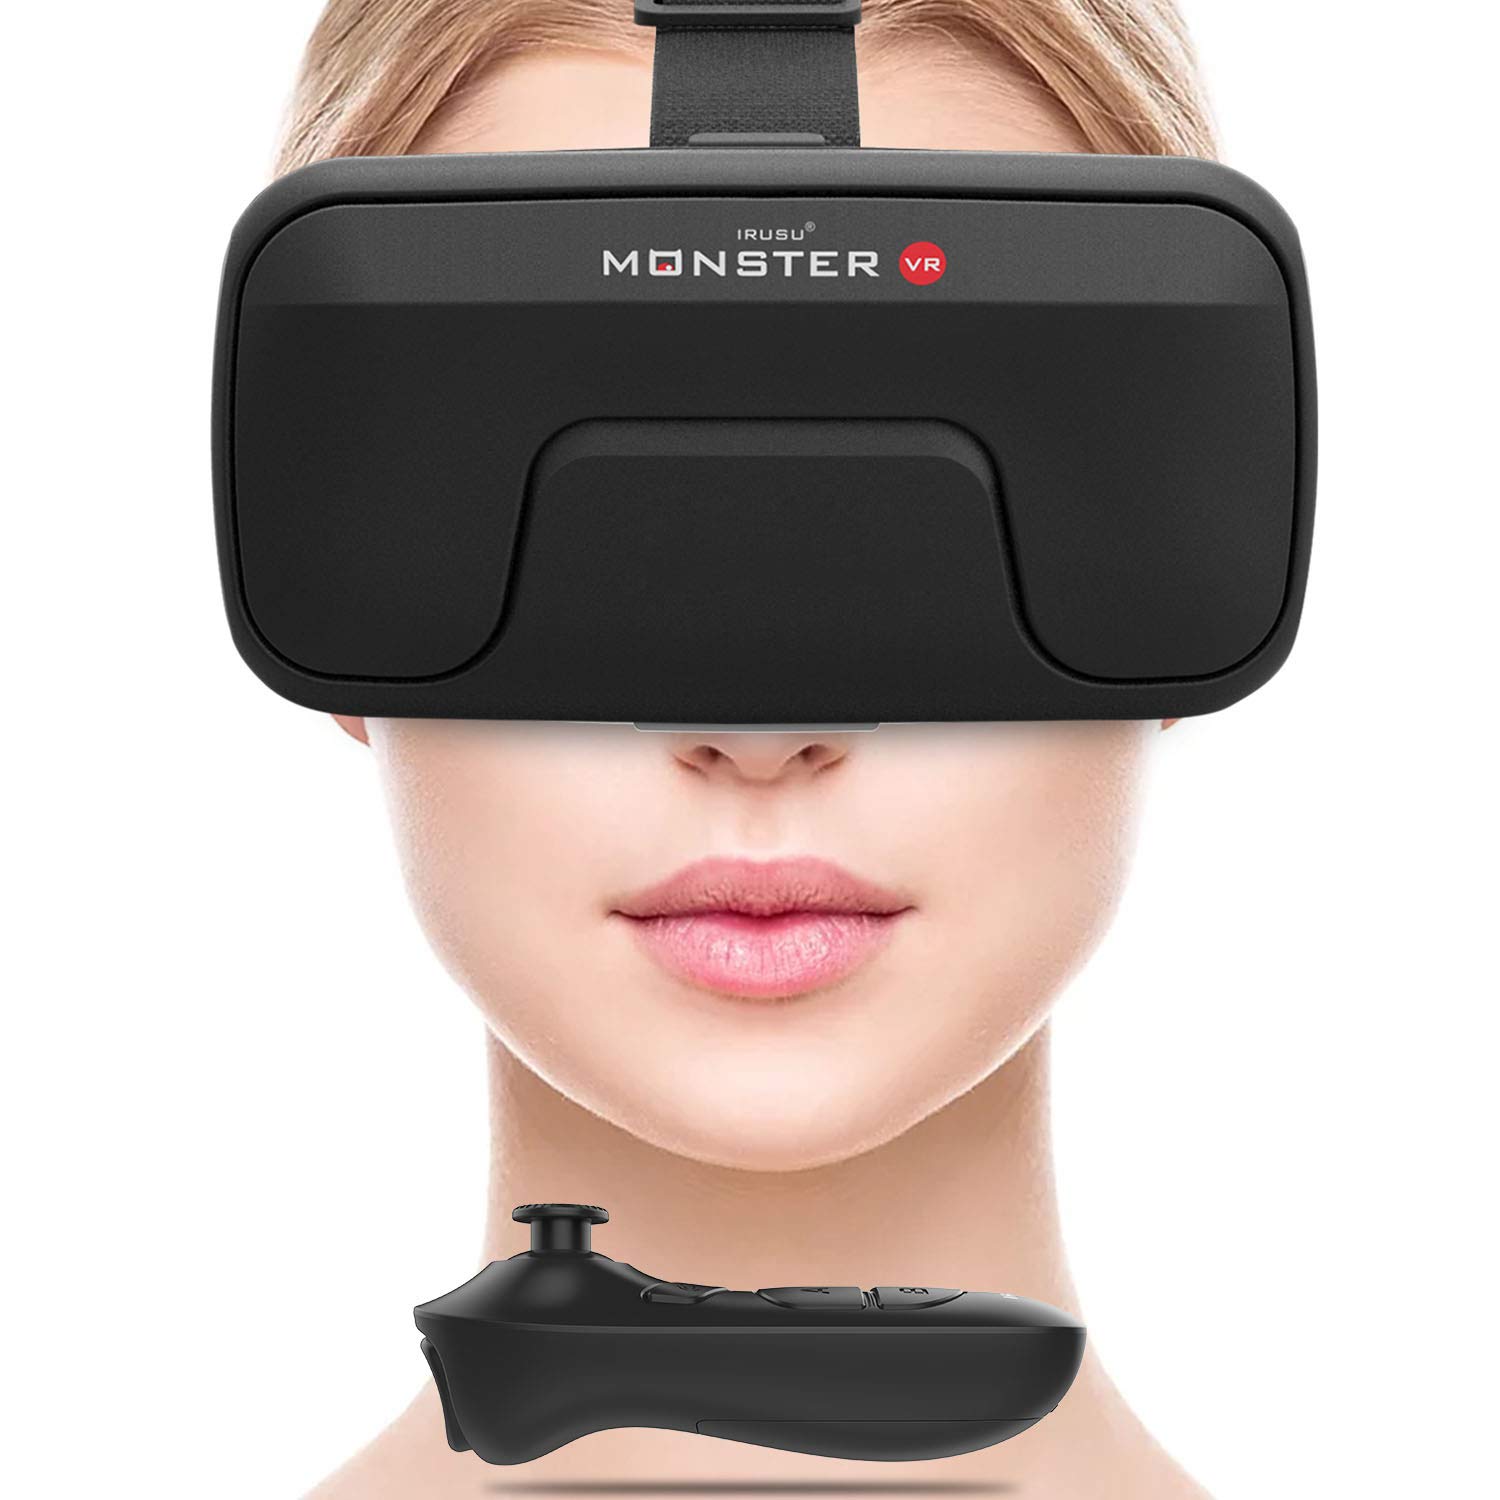 Irusu Monster VR Headset - Review